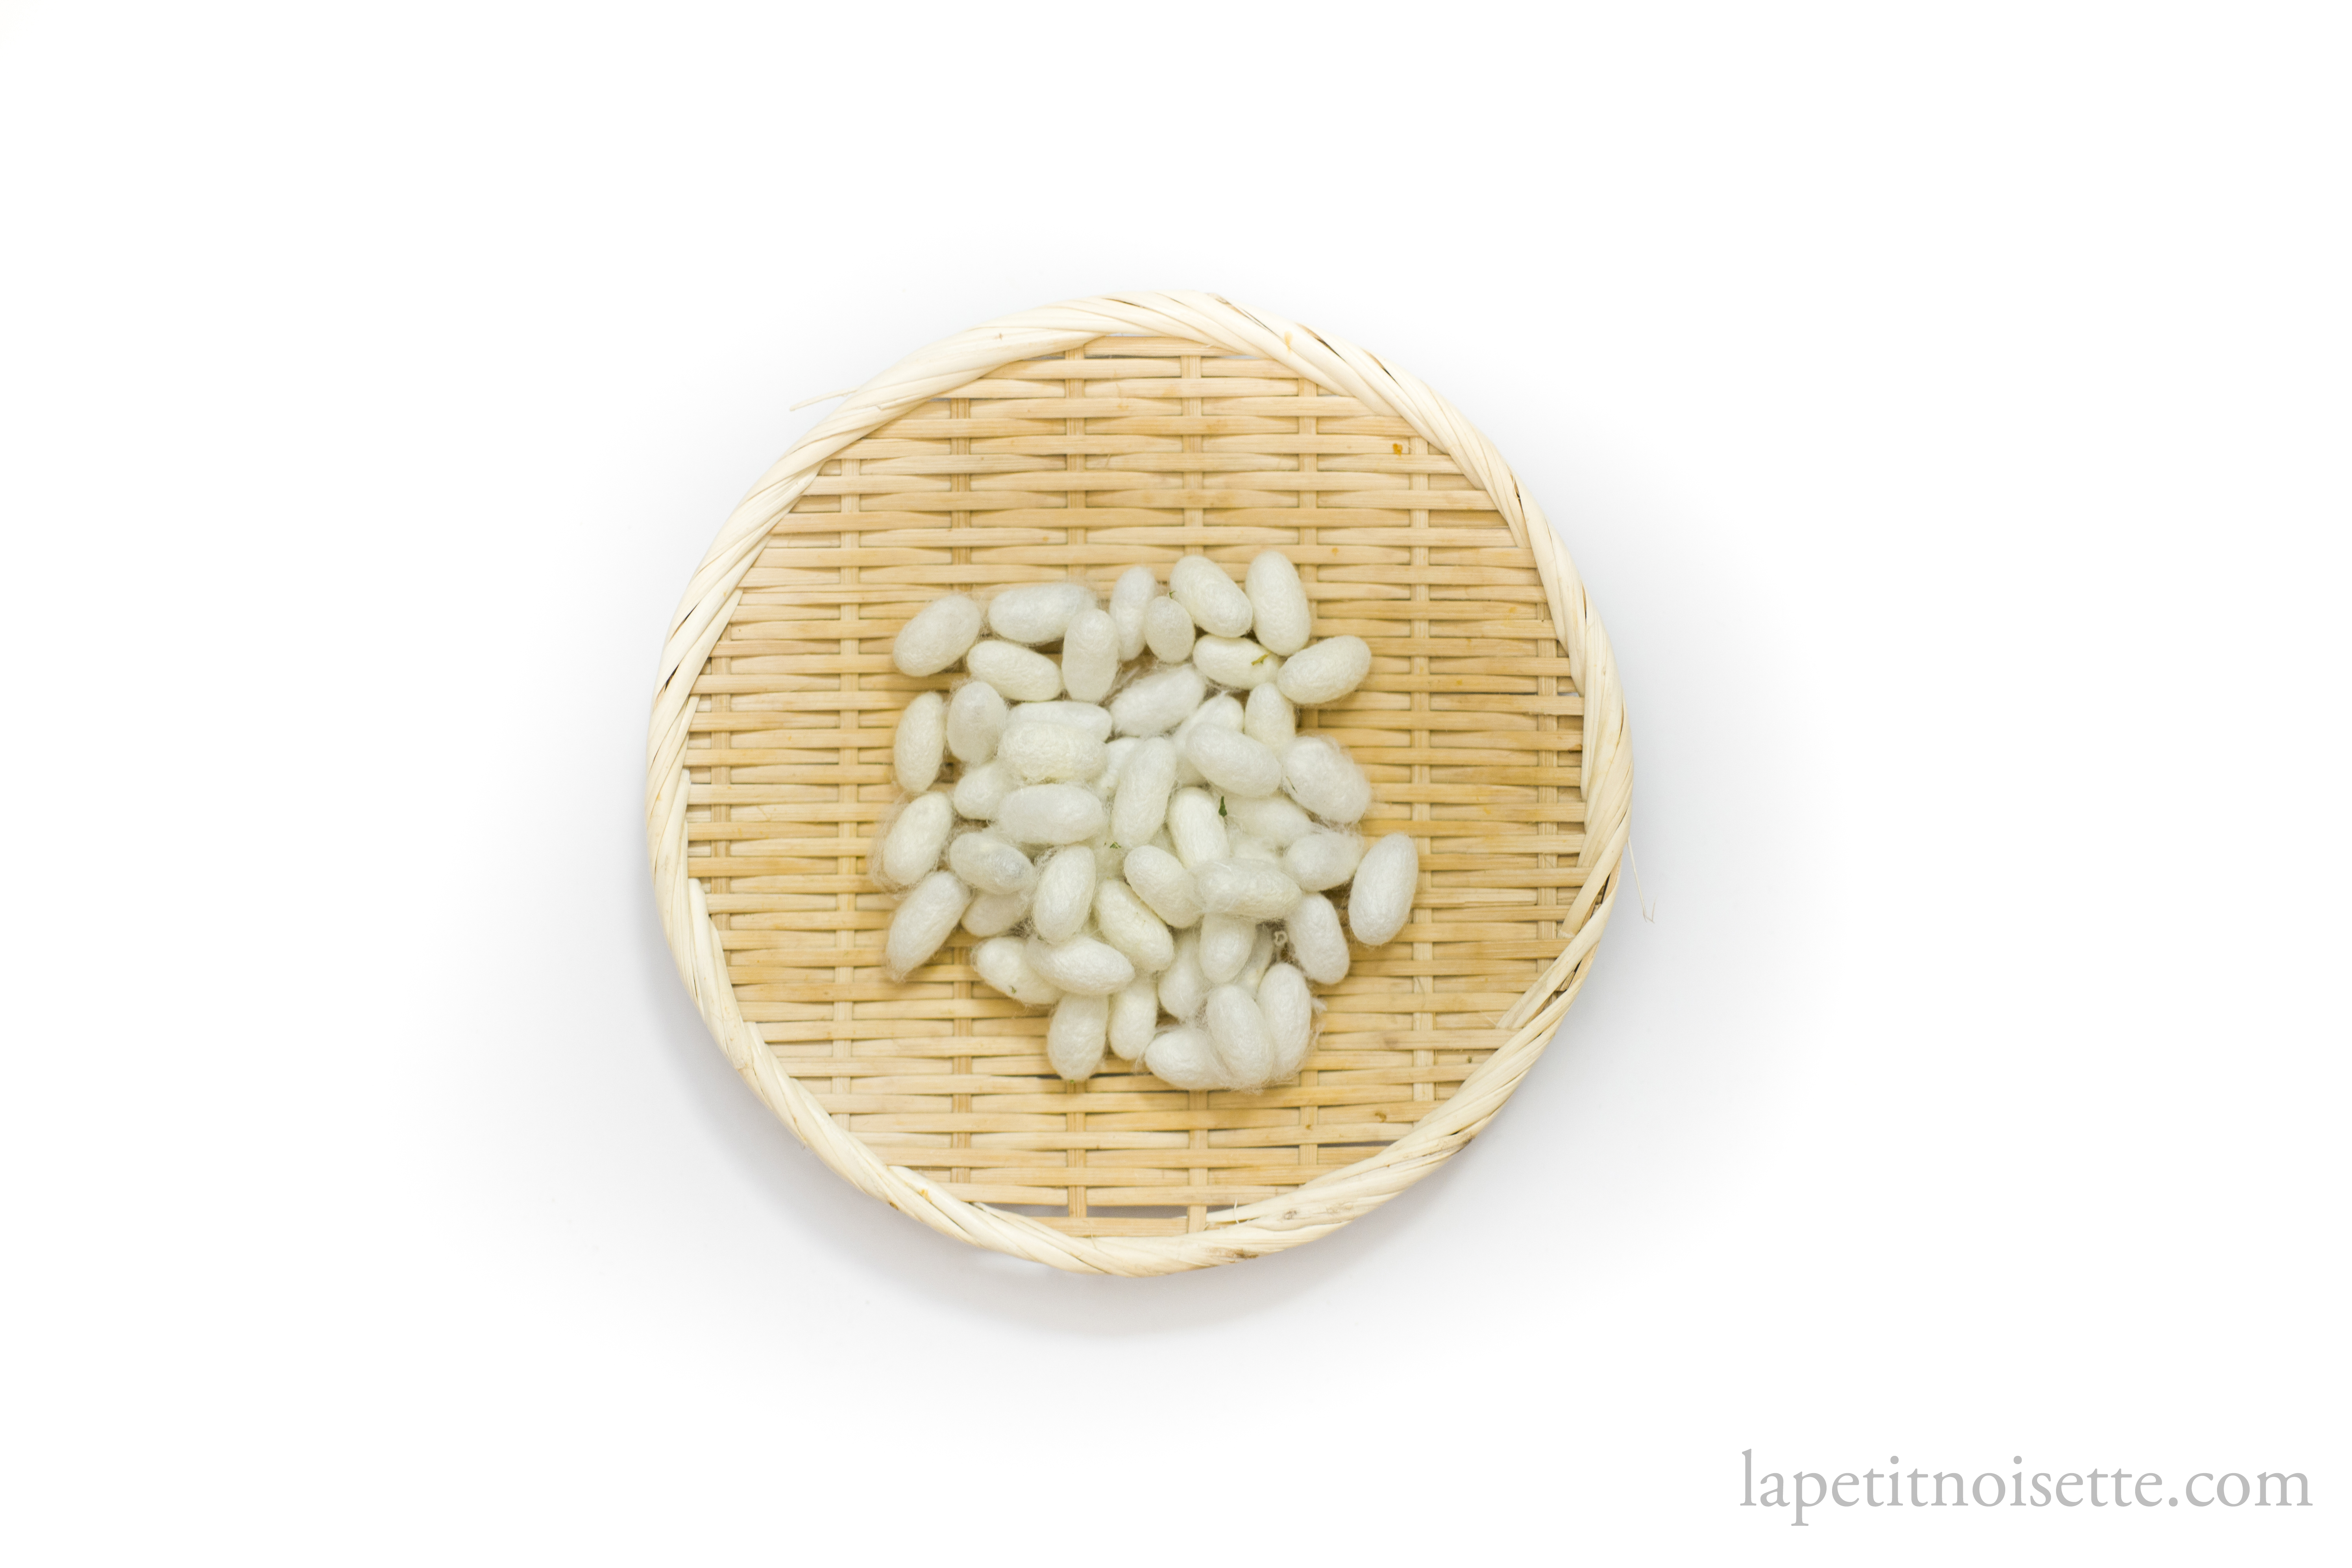 Japanese silkworm cocoons.